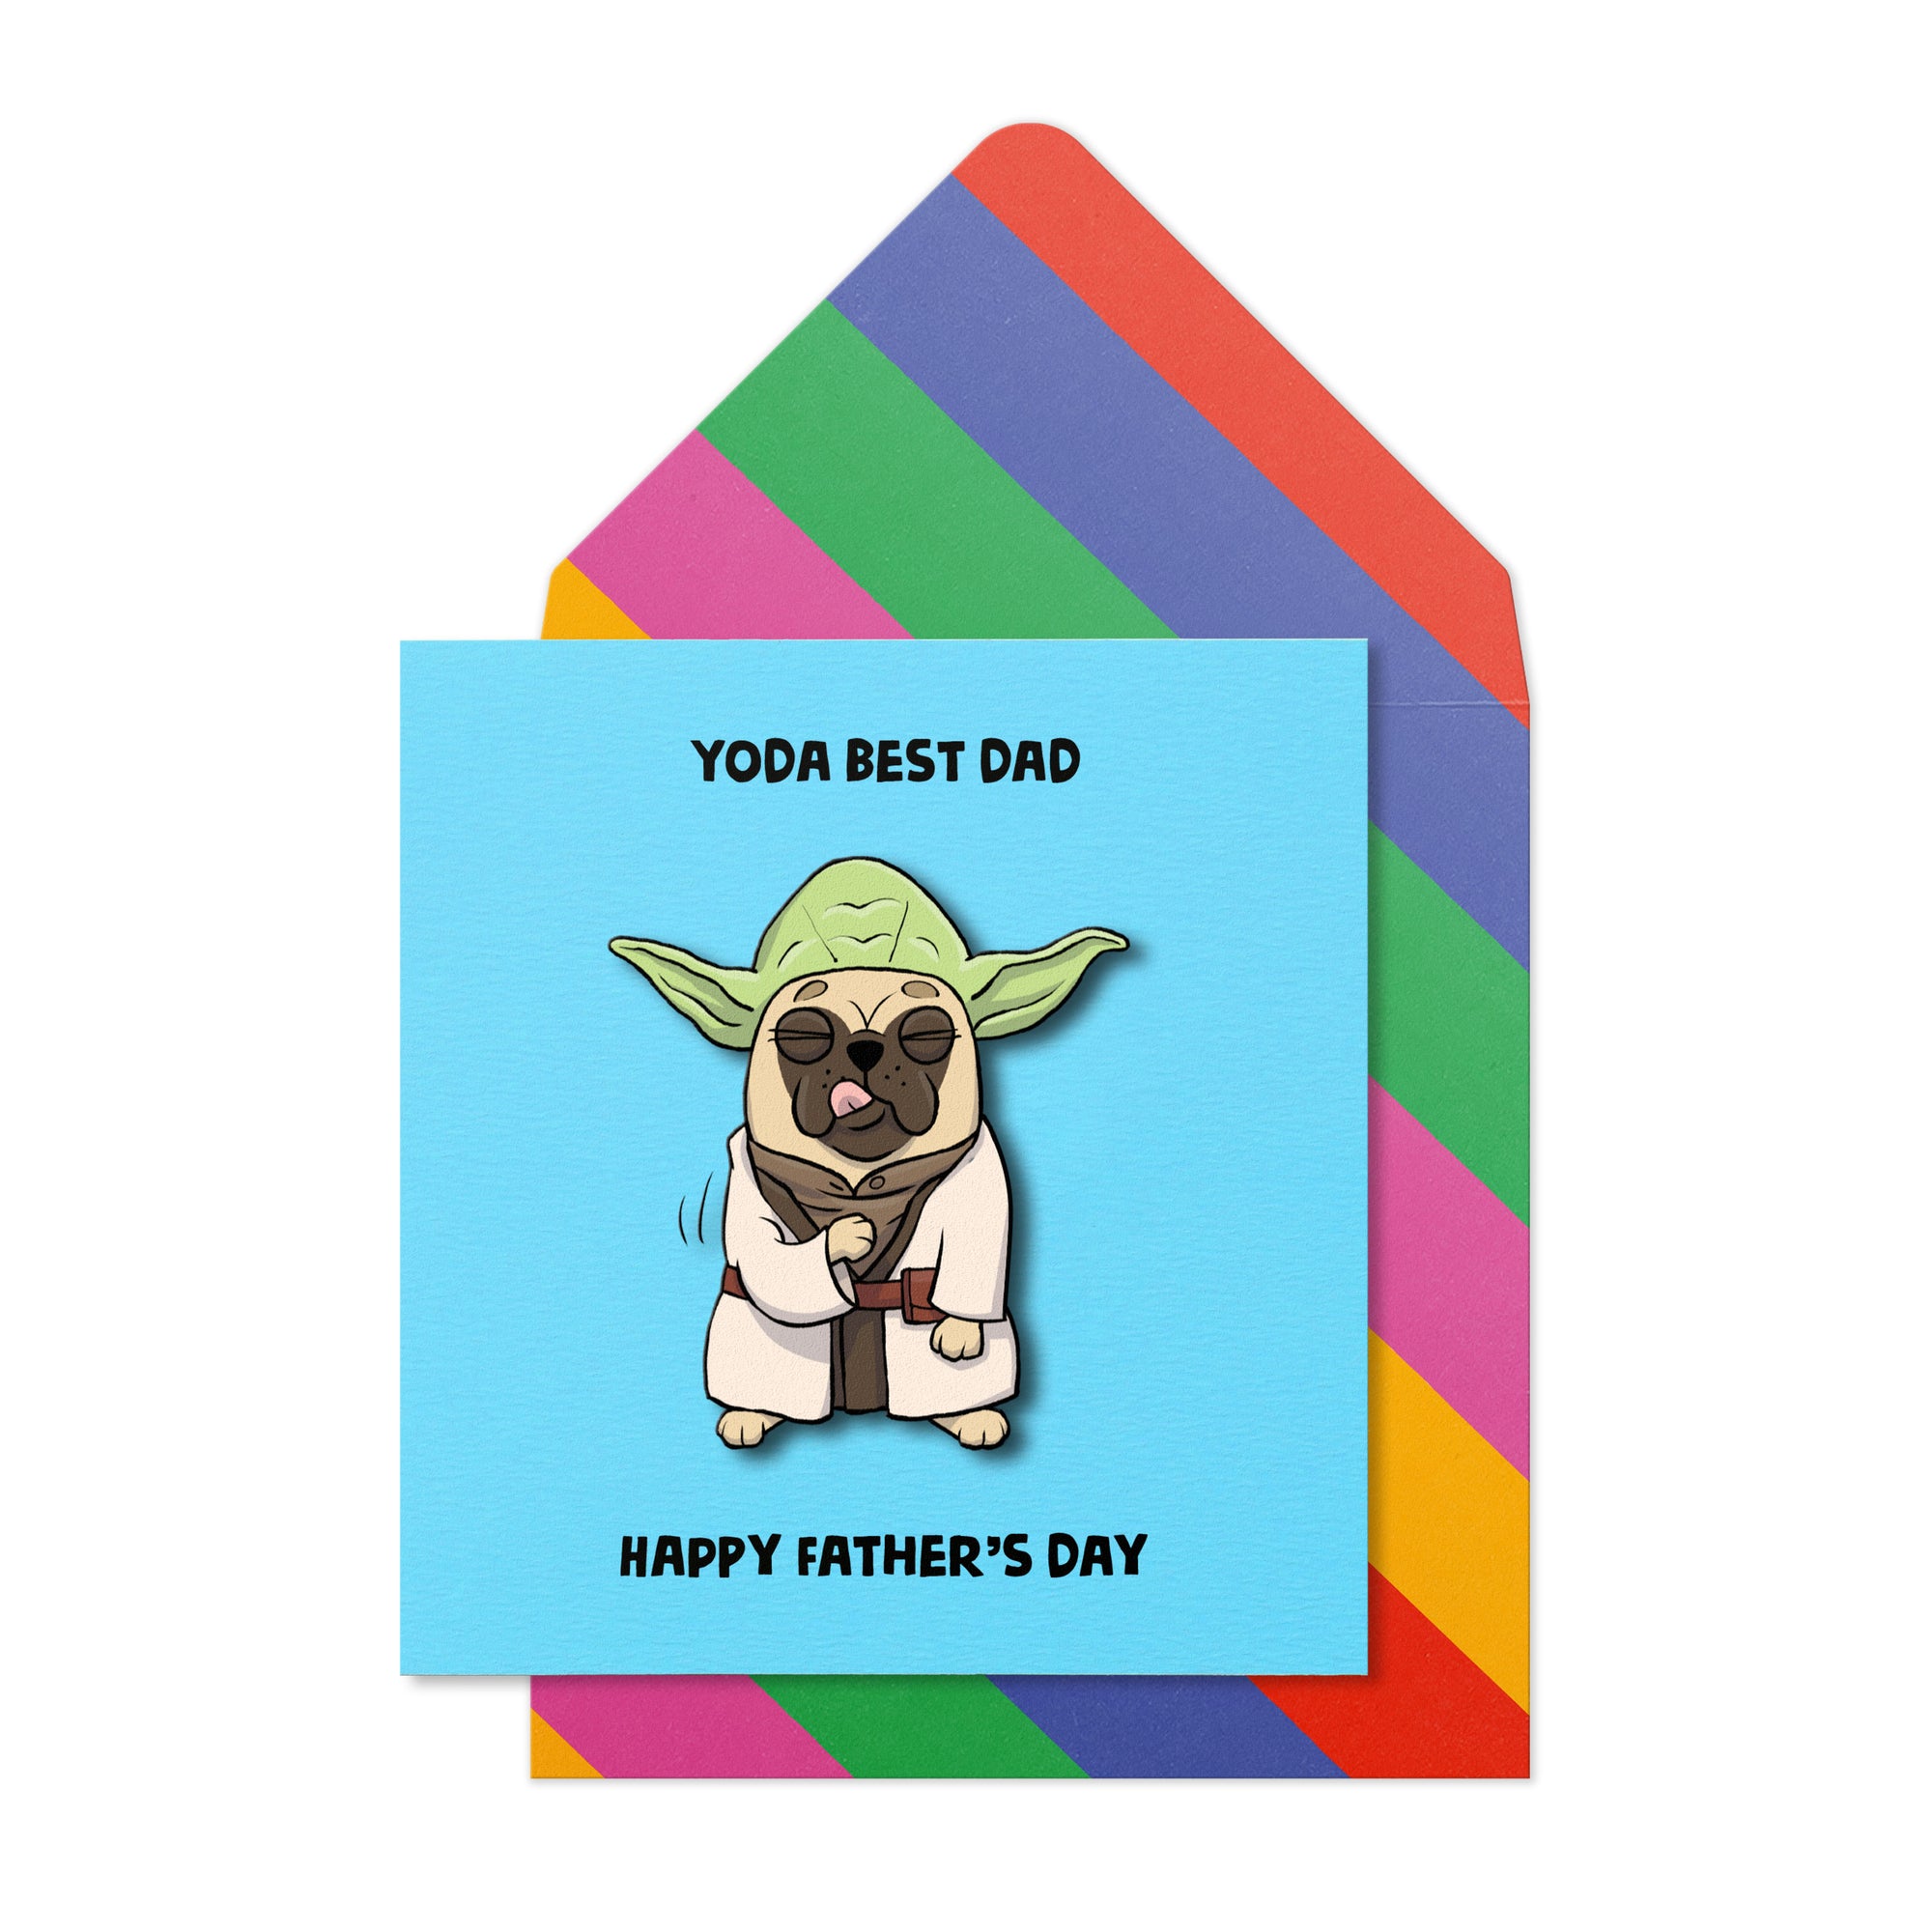 Yoda Best Dad!